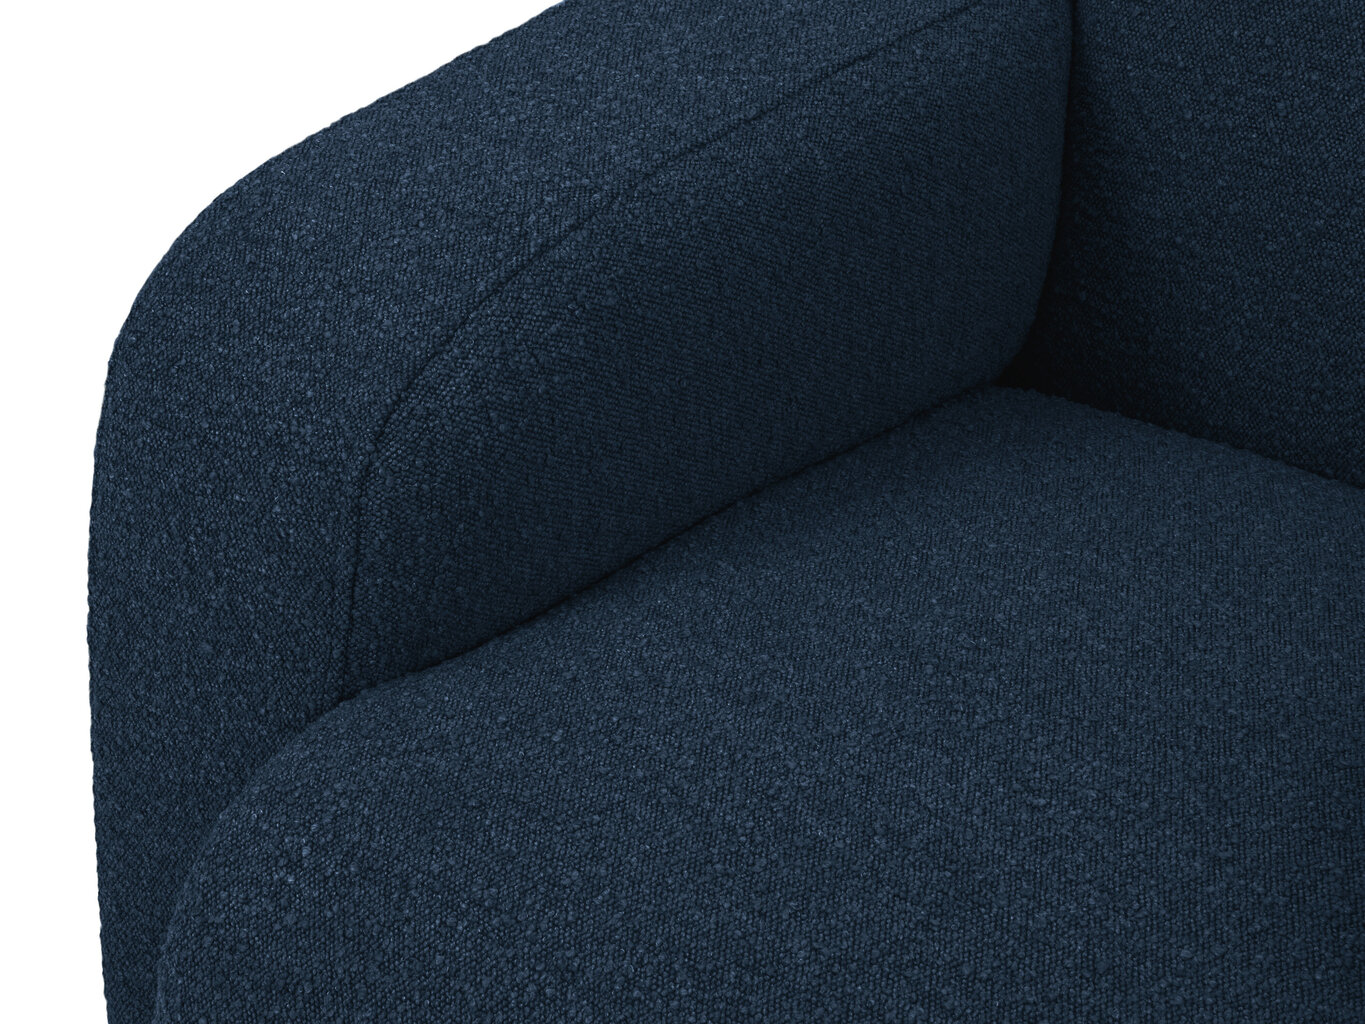 Dīvāns Windsor & Co Lola, zils цена и информация | Dīvāni | 220.lv